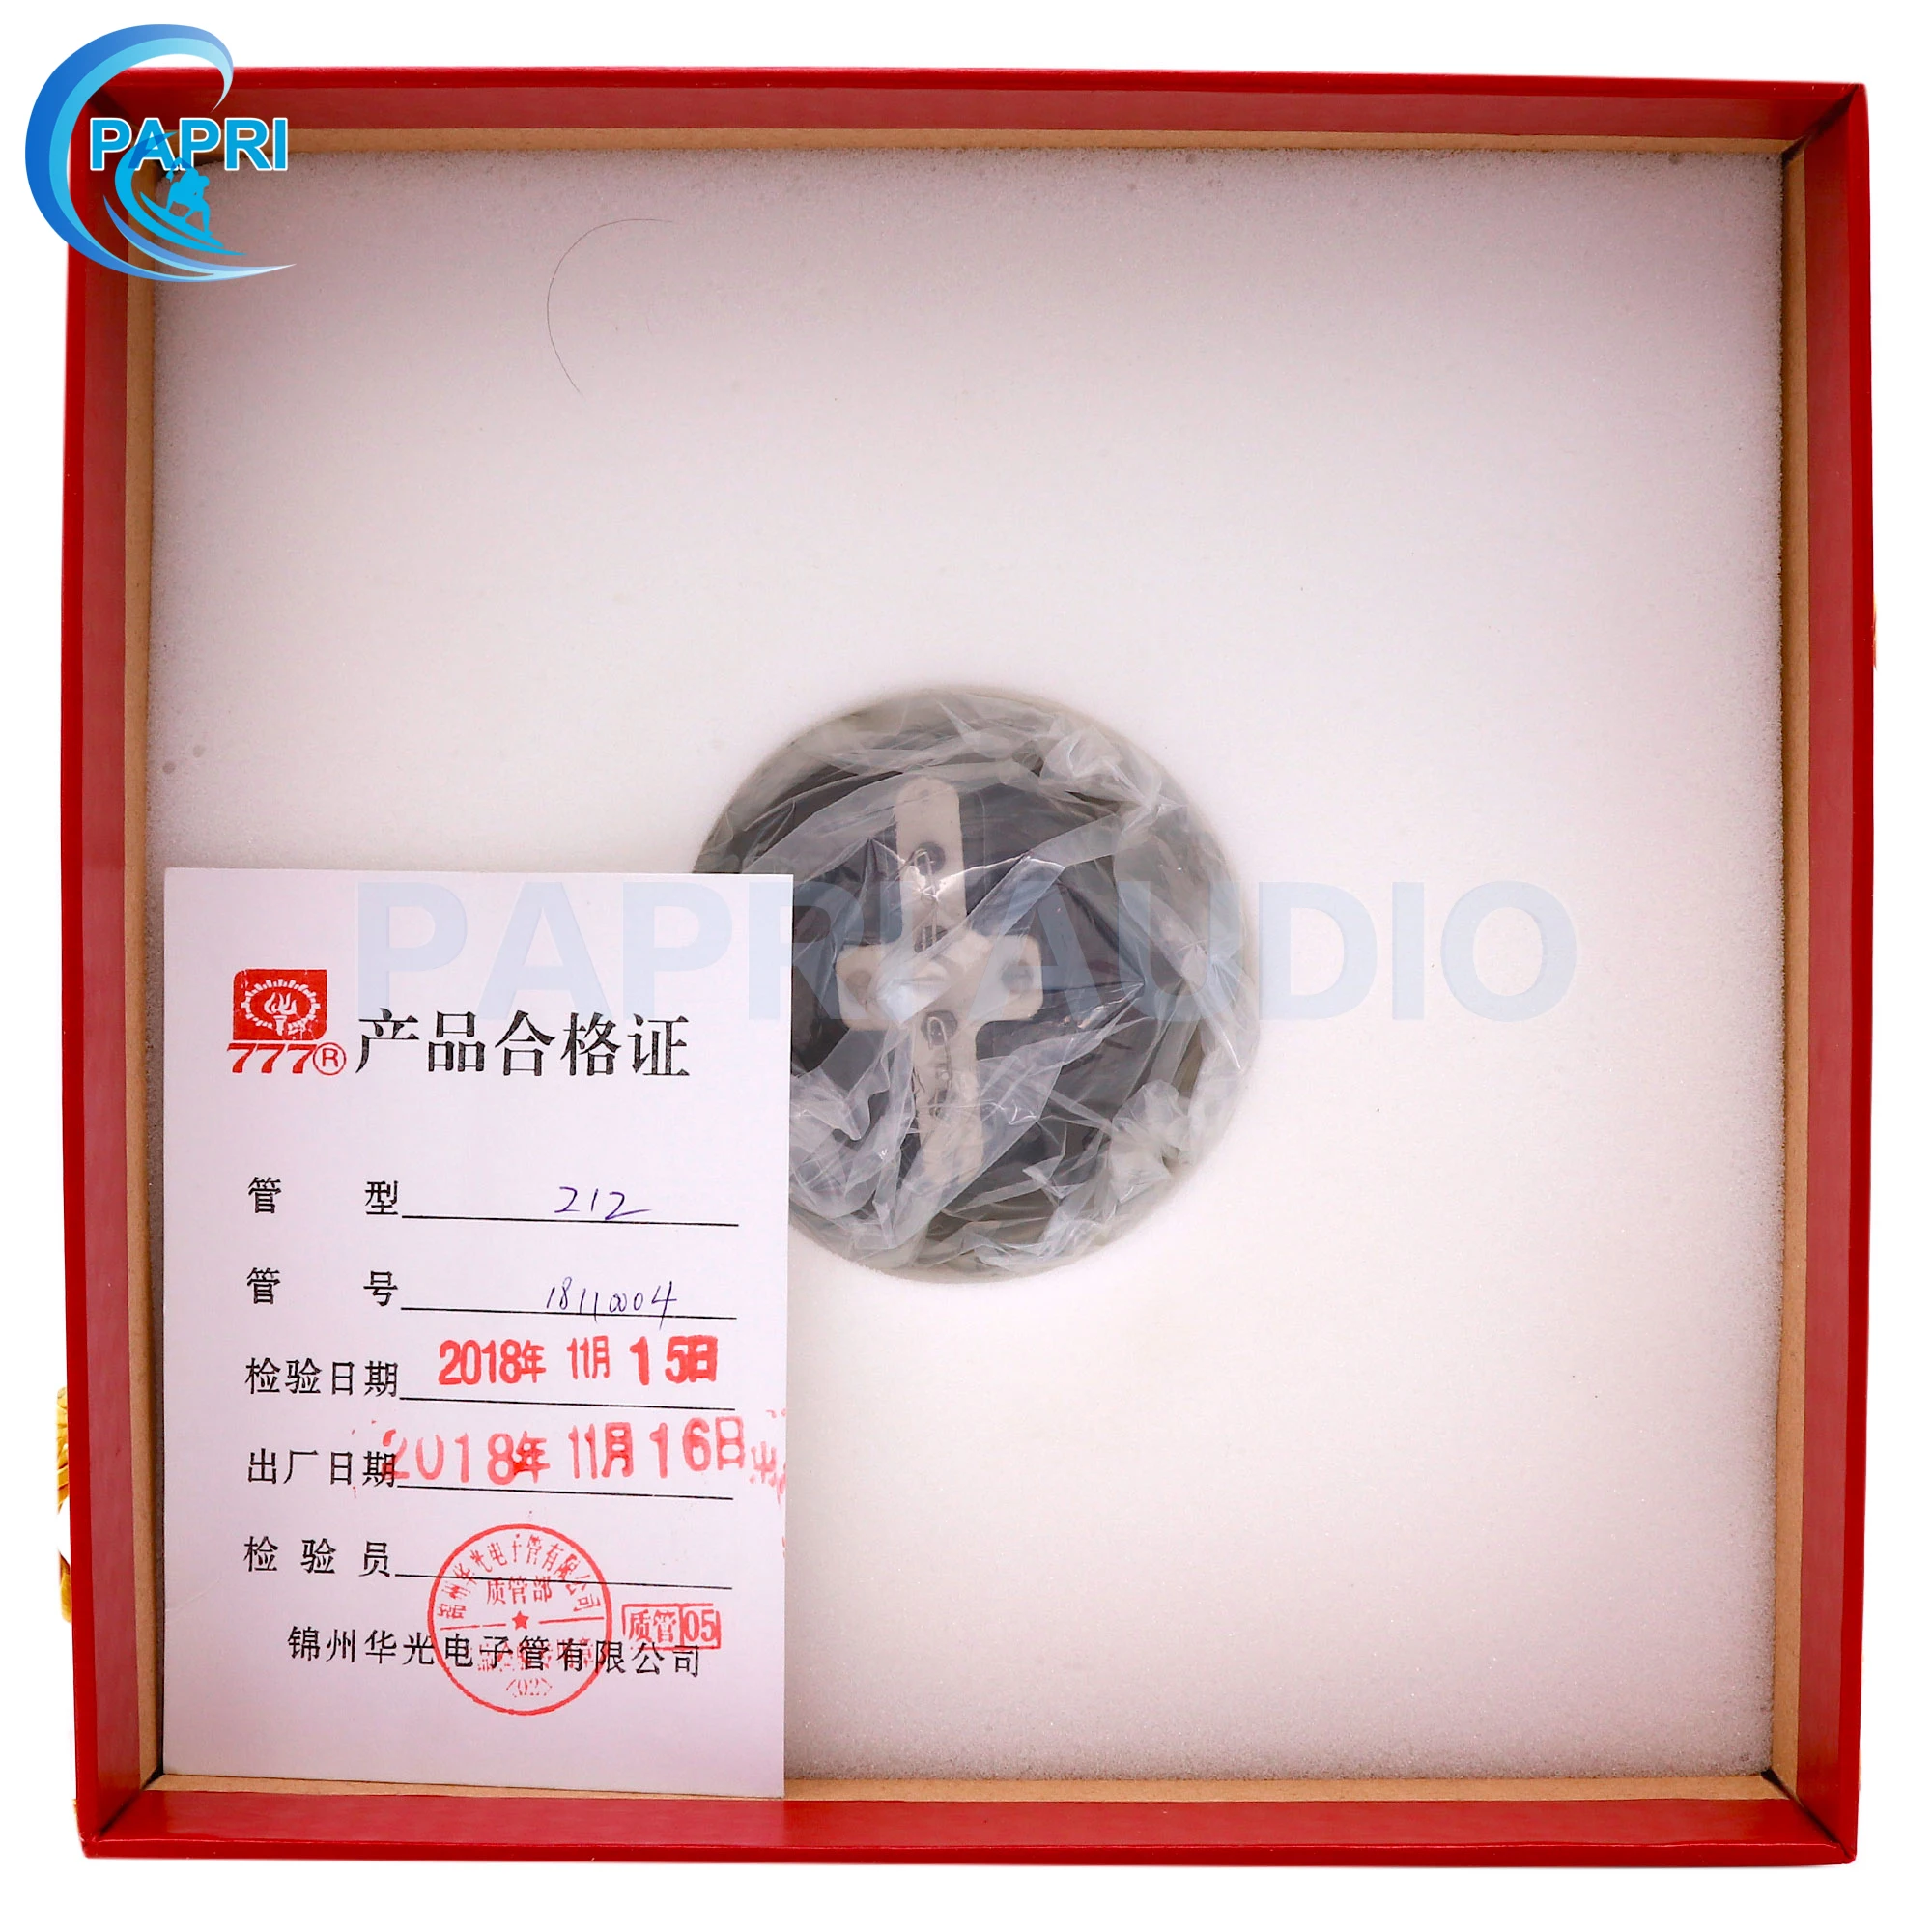 

PAPRI Newest Huaguang 212 Vacuum Tube HiFi Treasure For Audio HIFI DIY Tube Amplifier Factory Tested Matched 1Pair